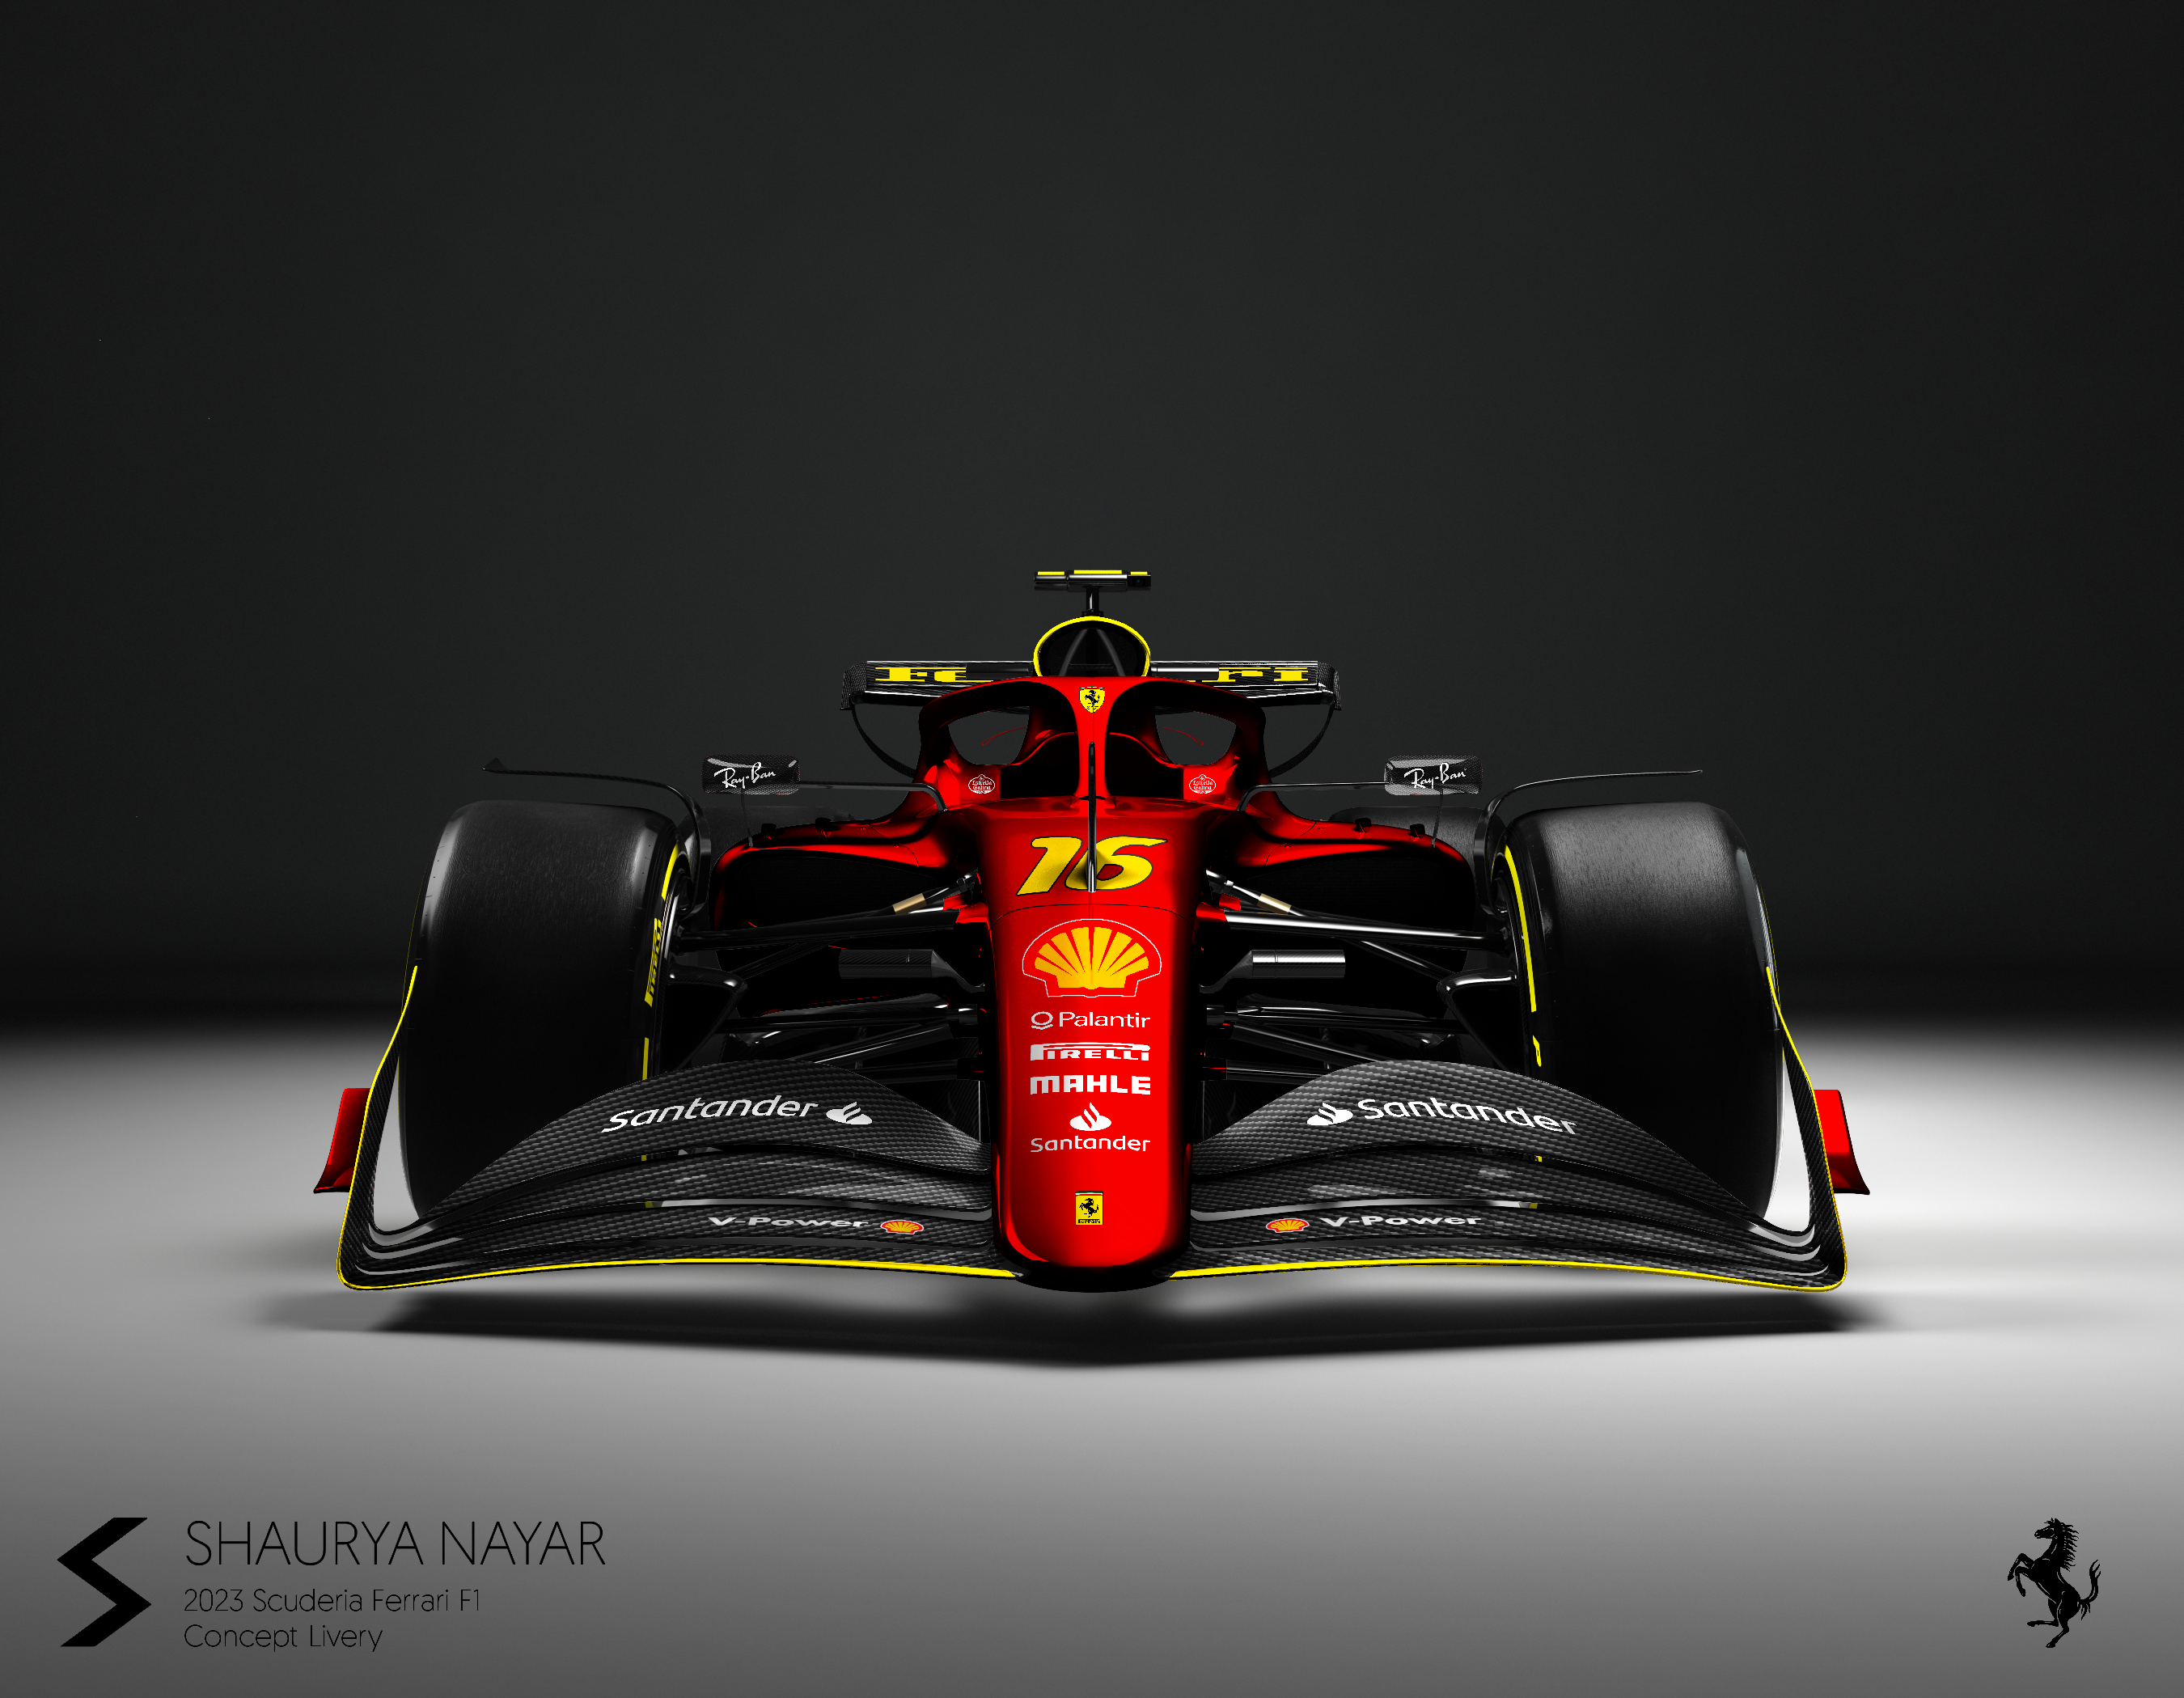 My Scuderia Ferrari F1 Concept Livery Hope You Like It R